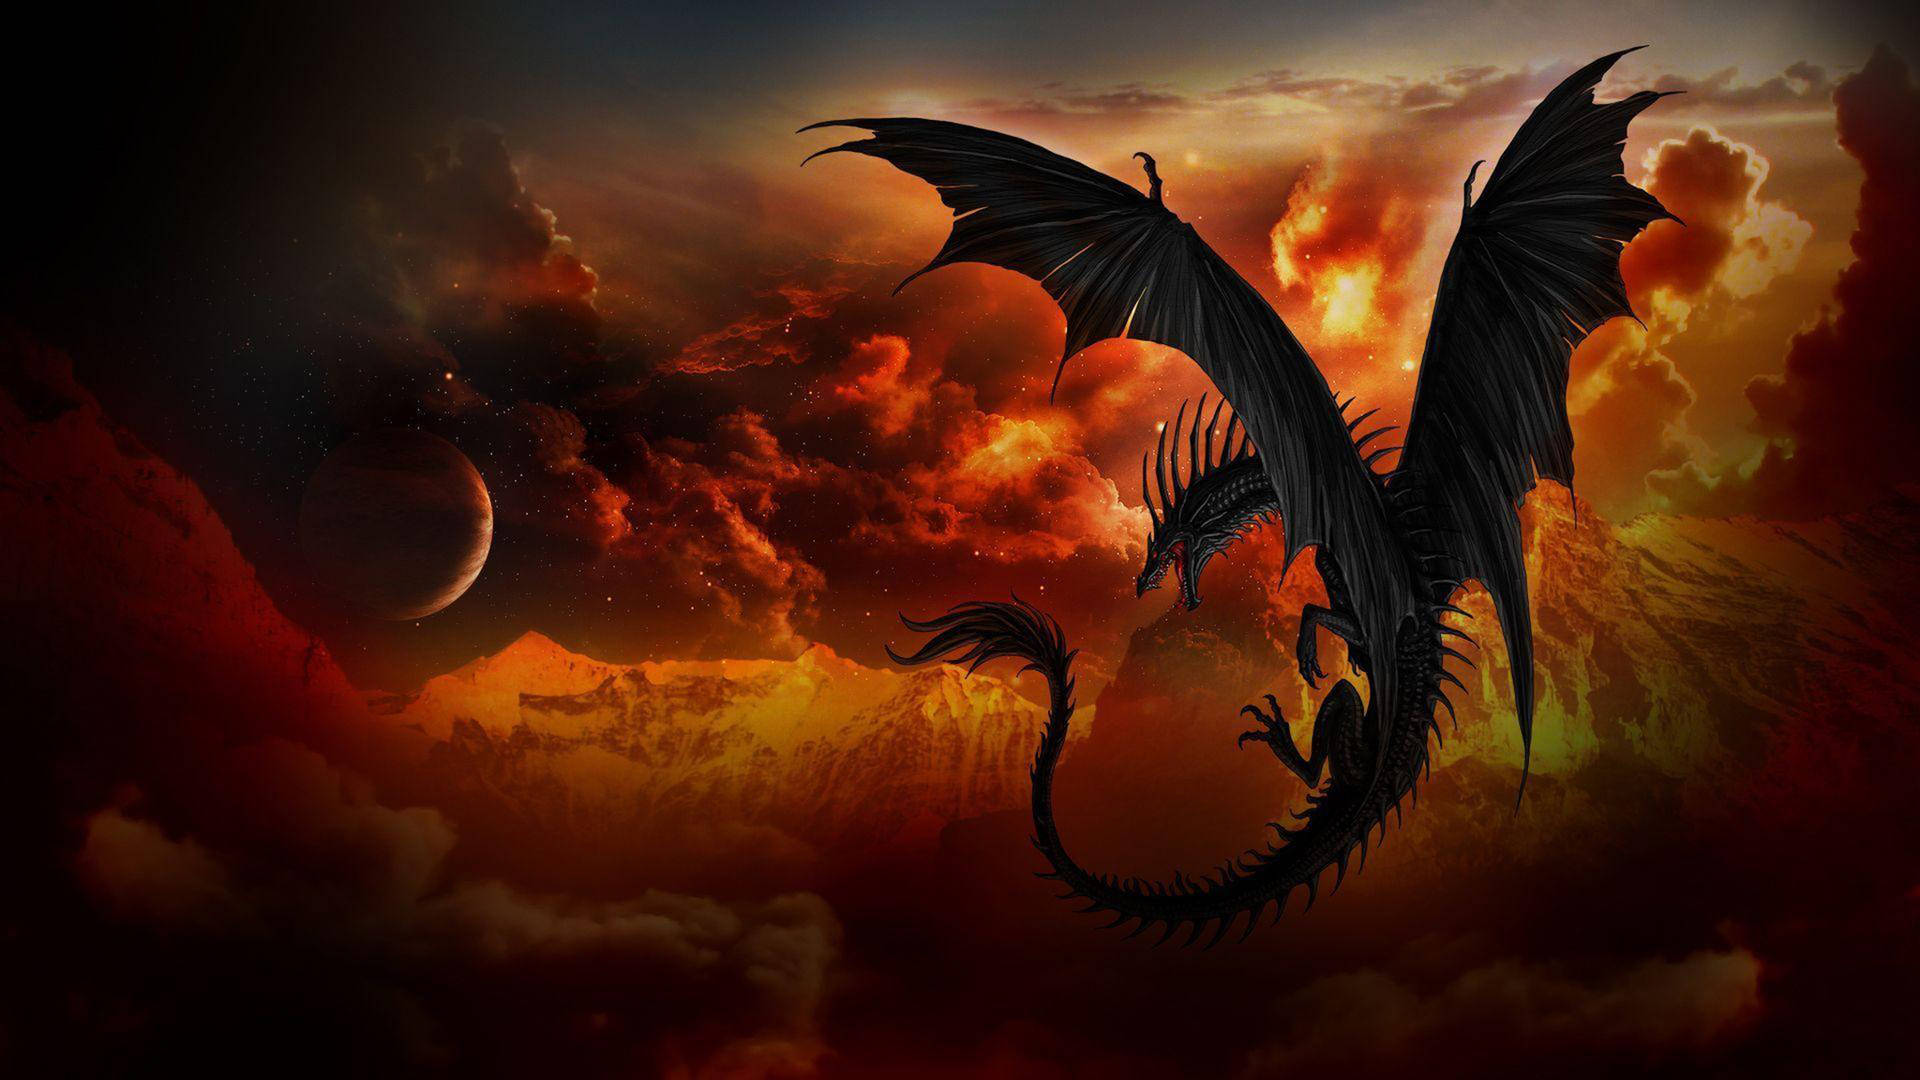 Eastern Dragon Fiery Aesthetic Background